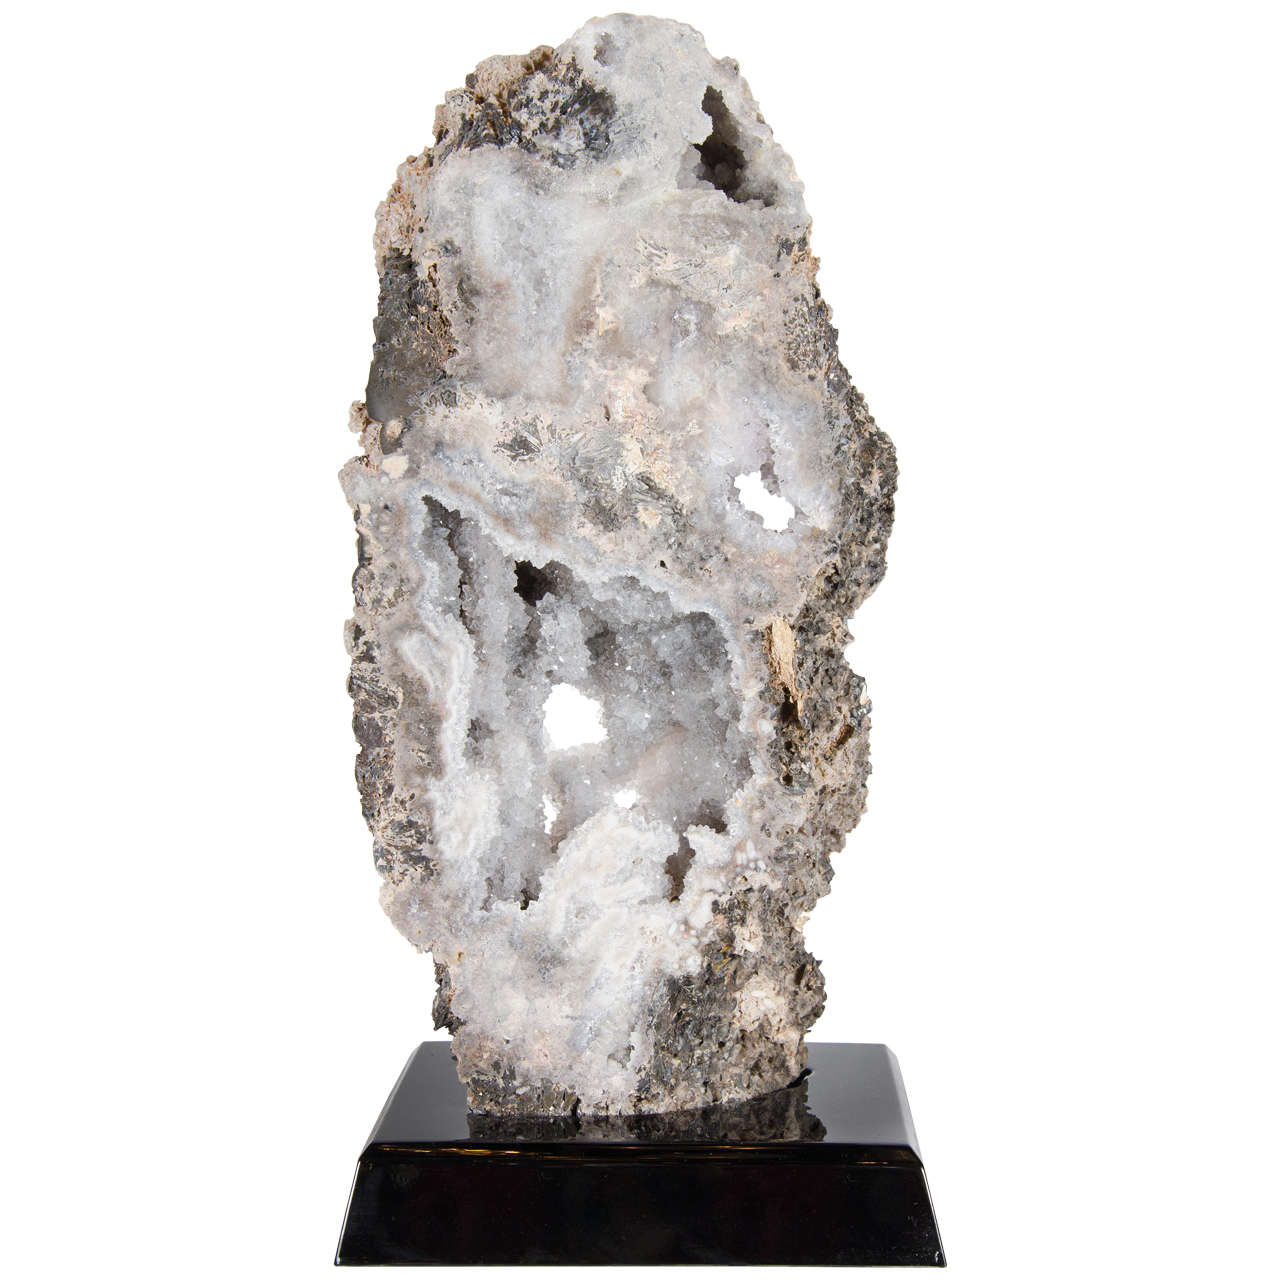 Phenomenal Organic Stone Geode Crystal Specimen on Ebonized walnut Stand